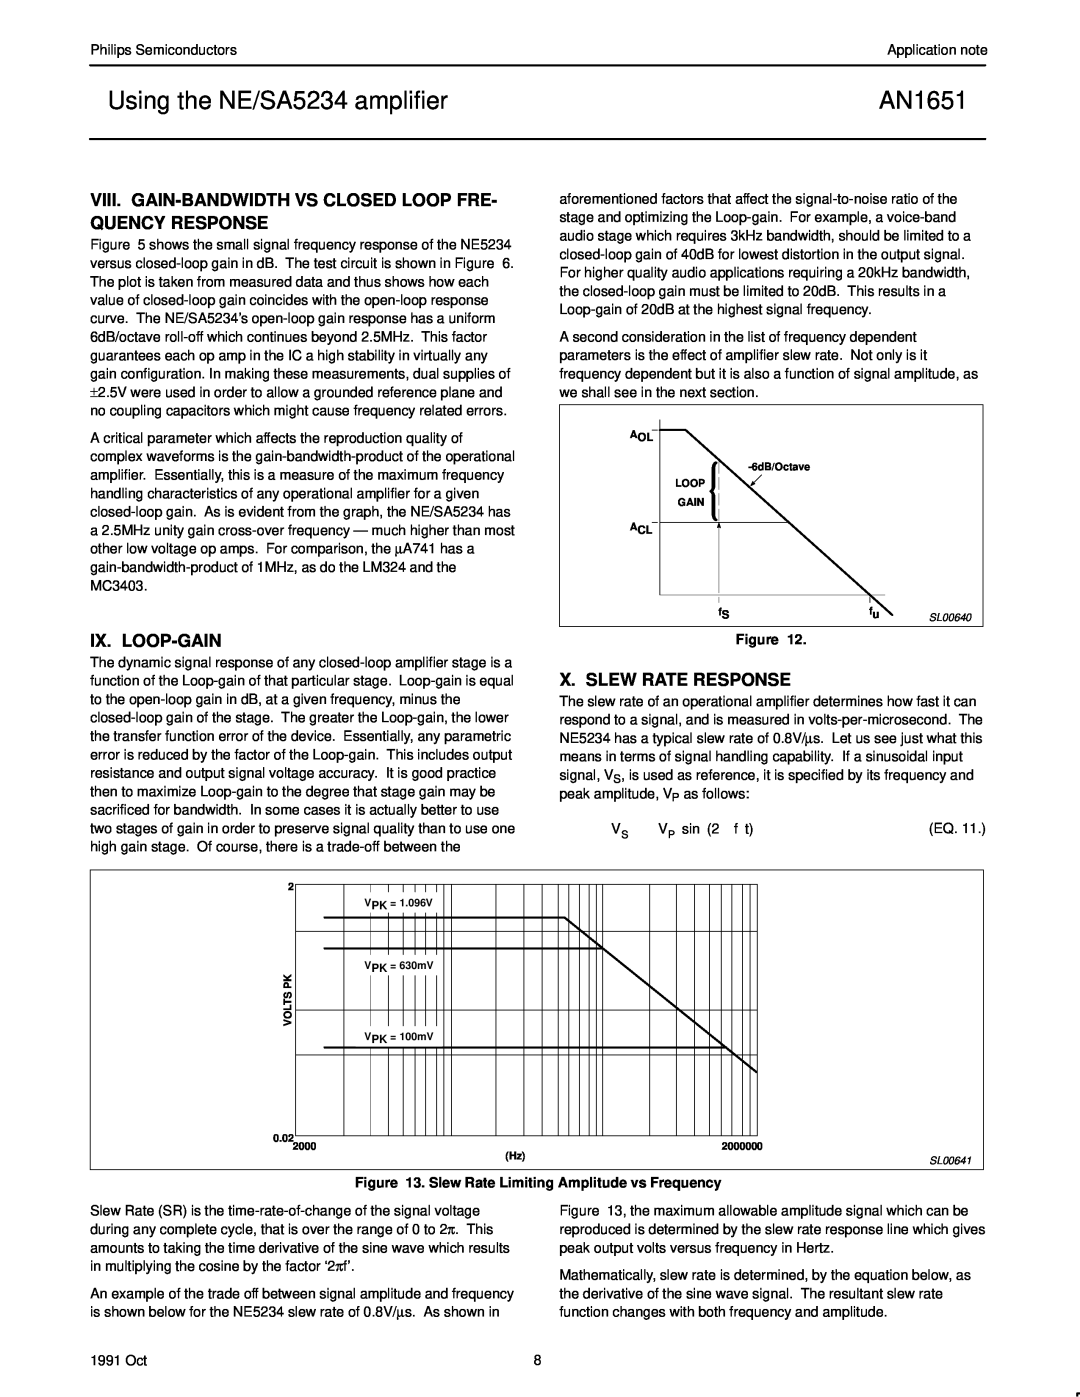 Philips AN1651 manual Ix. Loop-Gain, X. Slew Rate Response, Using the NE/SA5234 amplifier 